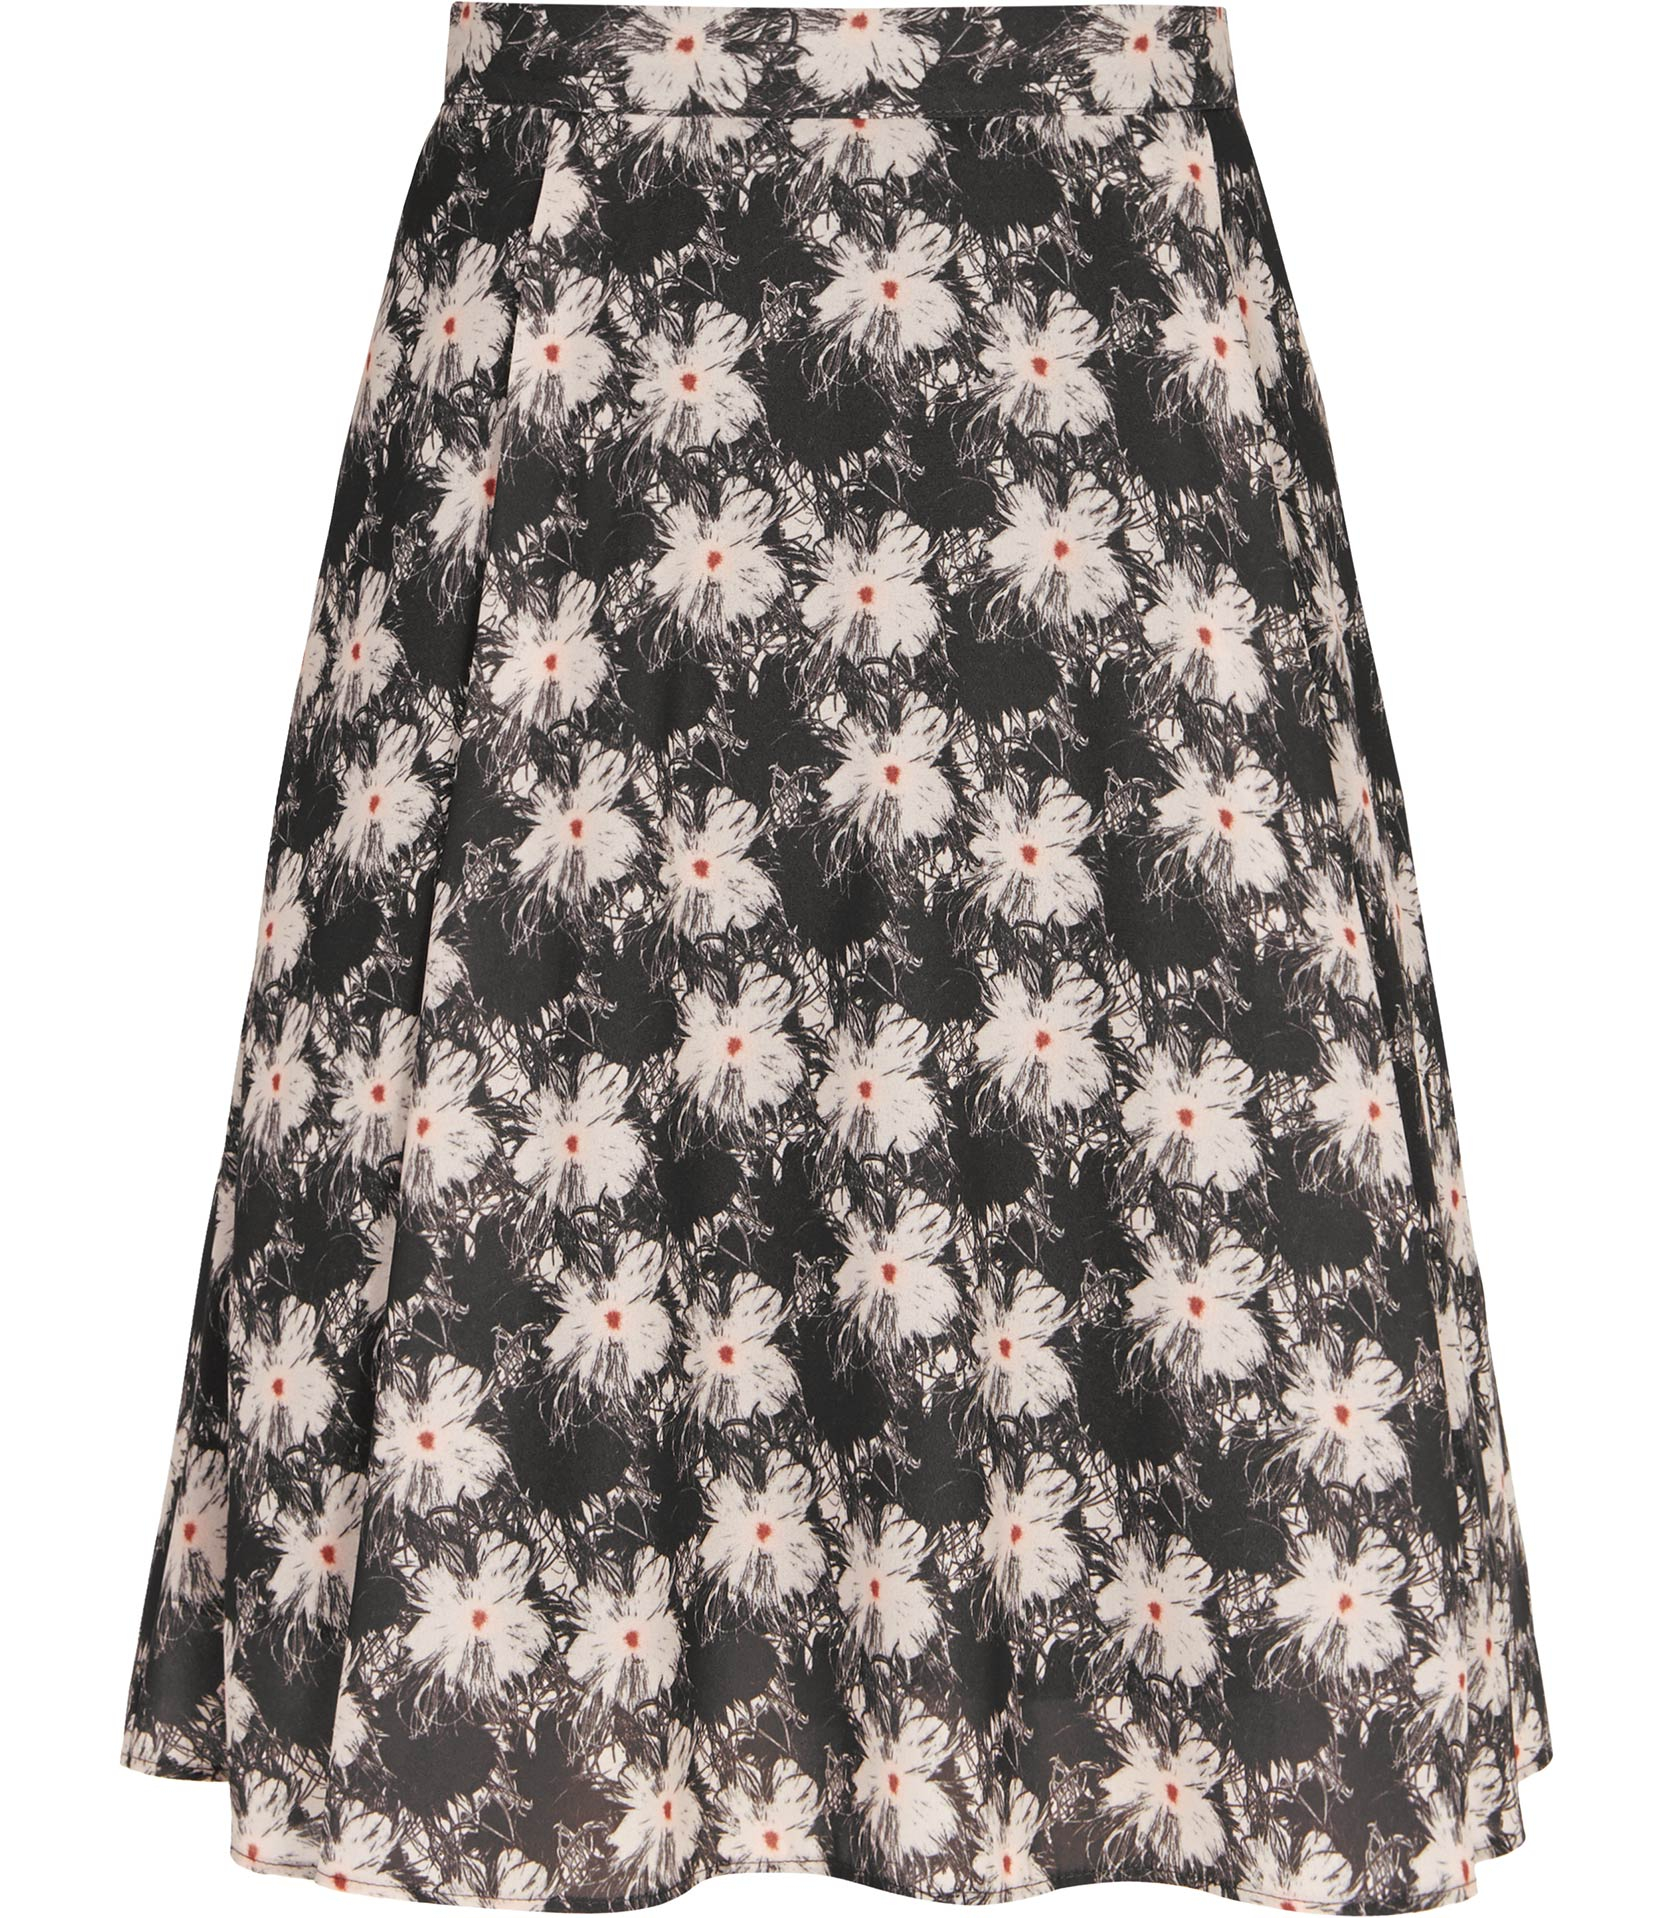 Reiss Hemi Floral Print Skirt in Black Blush (Black) - Lyst